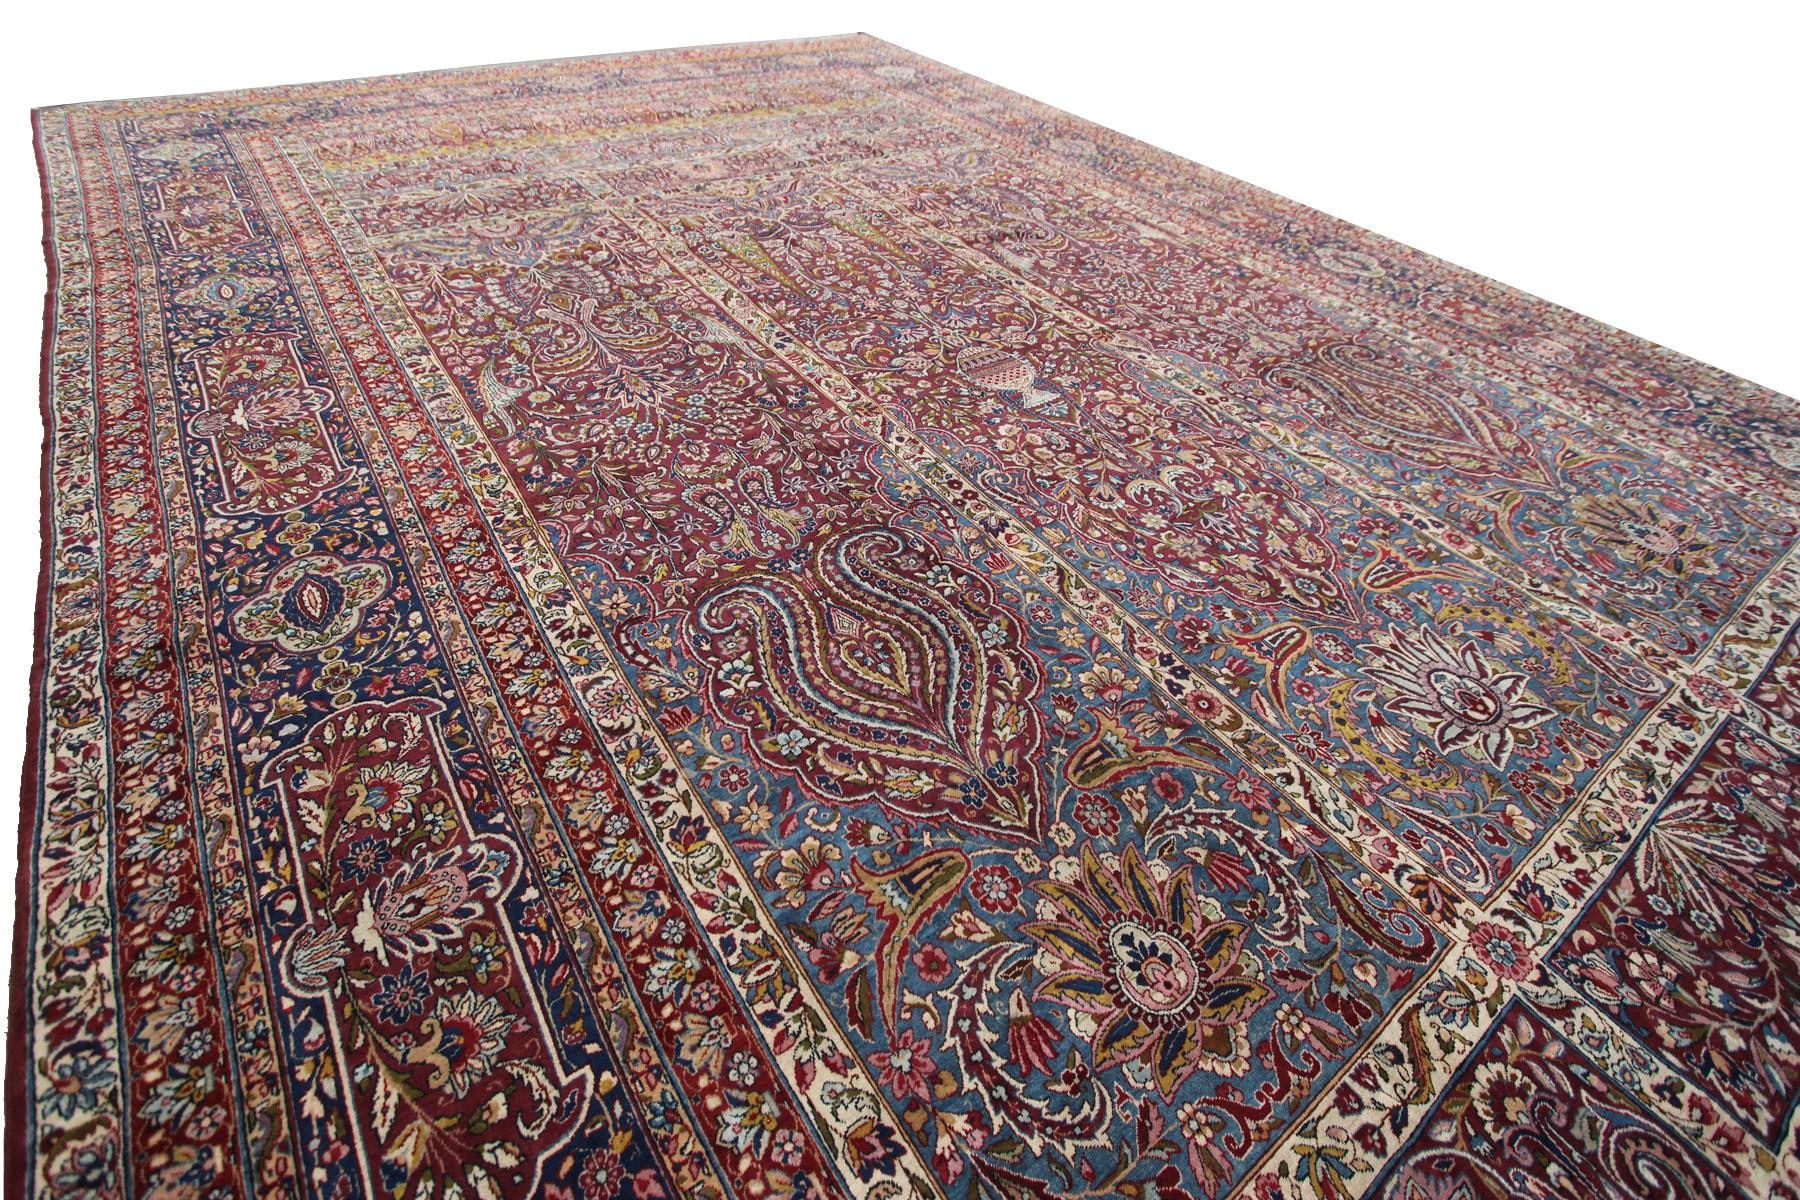 Exceptional Antique Rug Persian Kermanshah purple Red Kork Wool

11'4